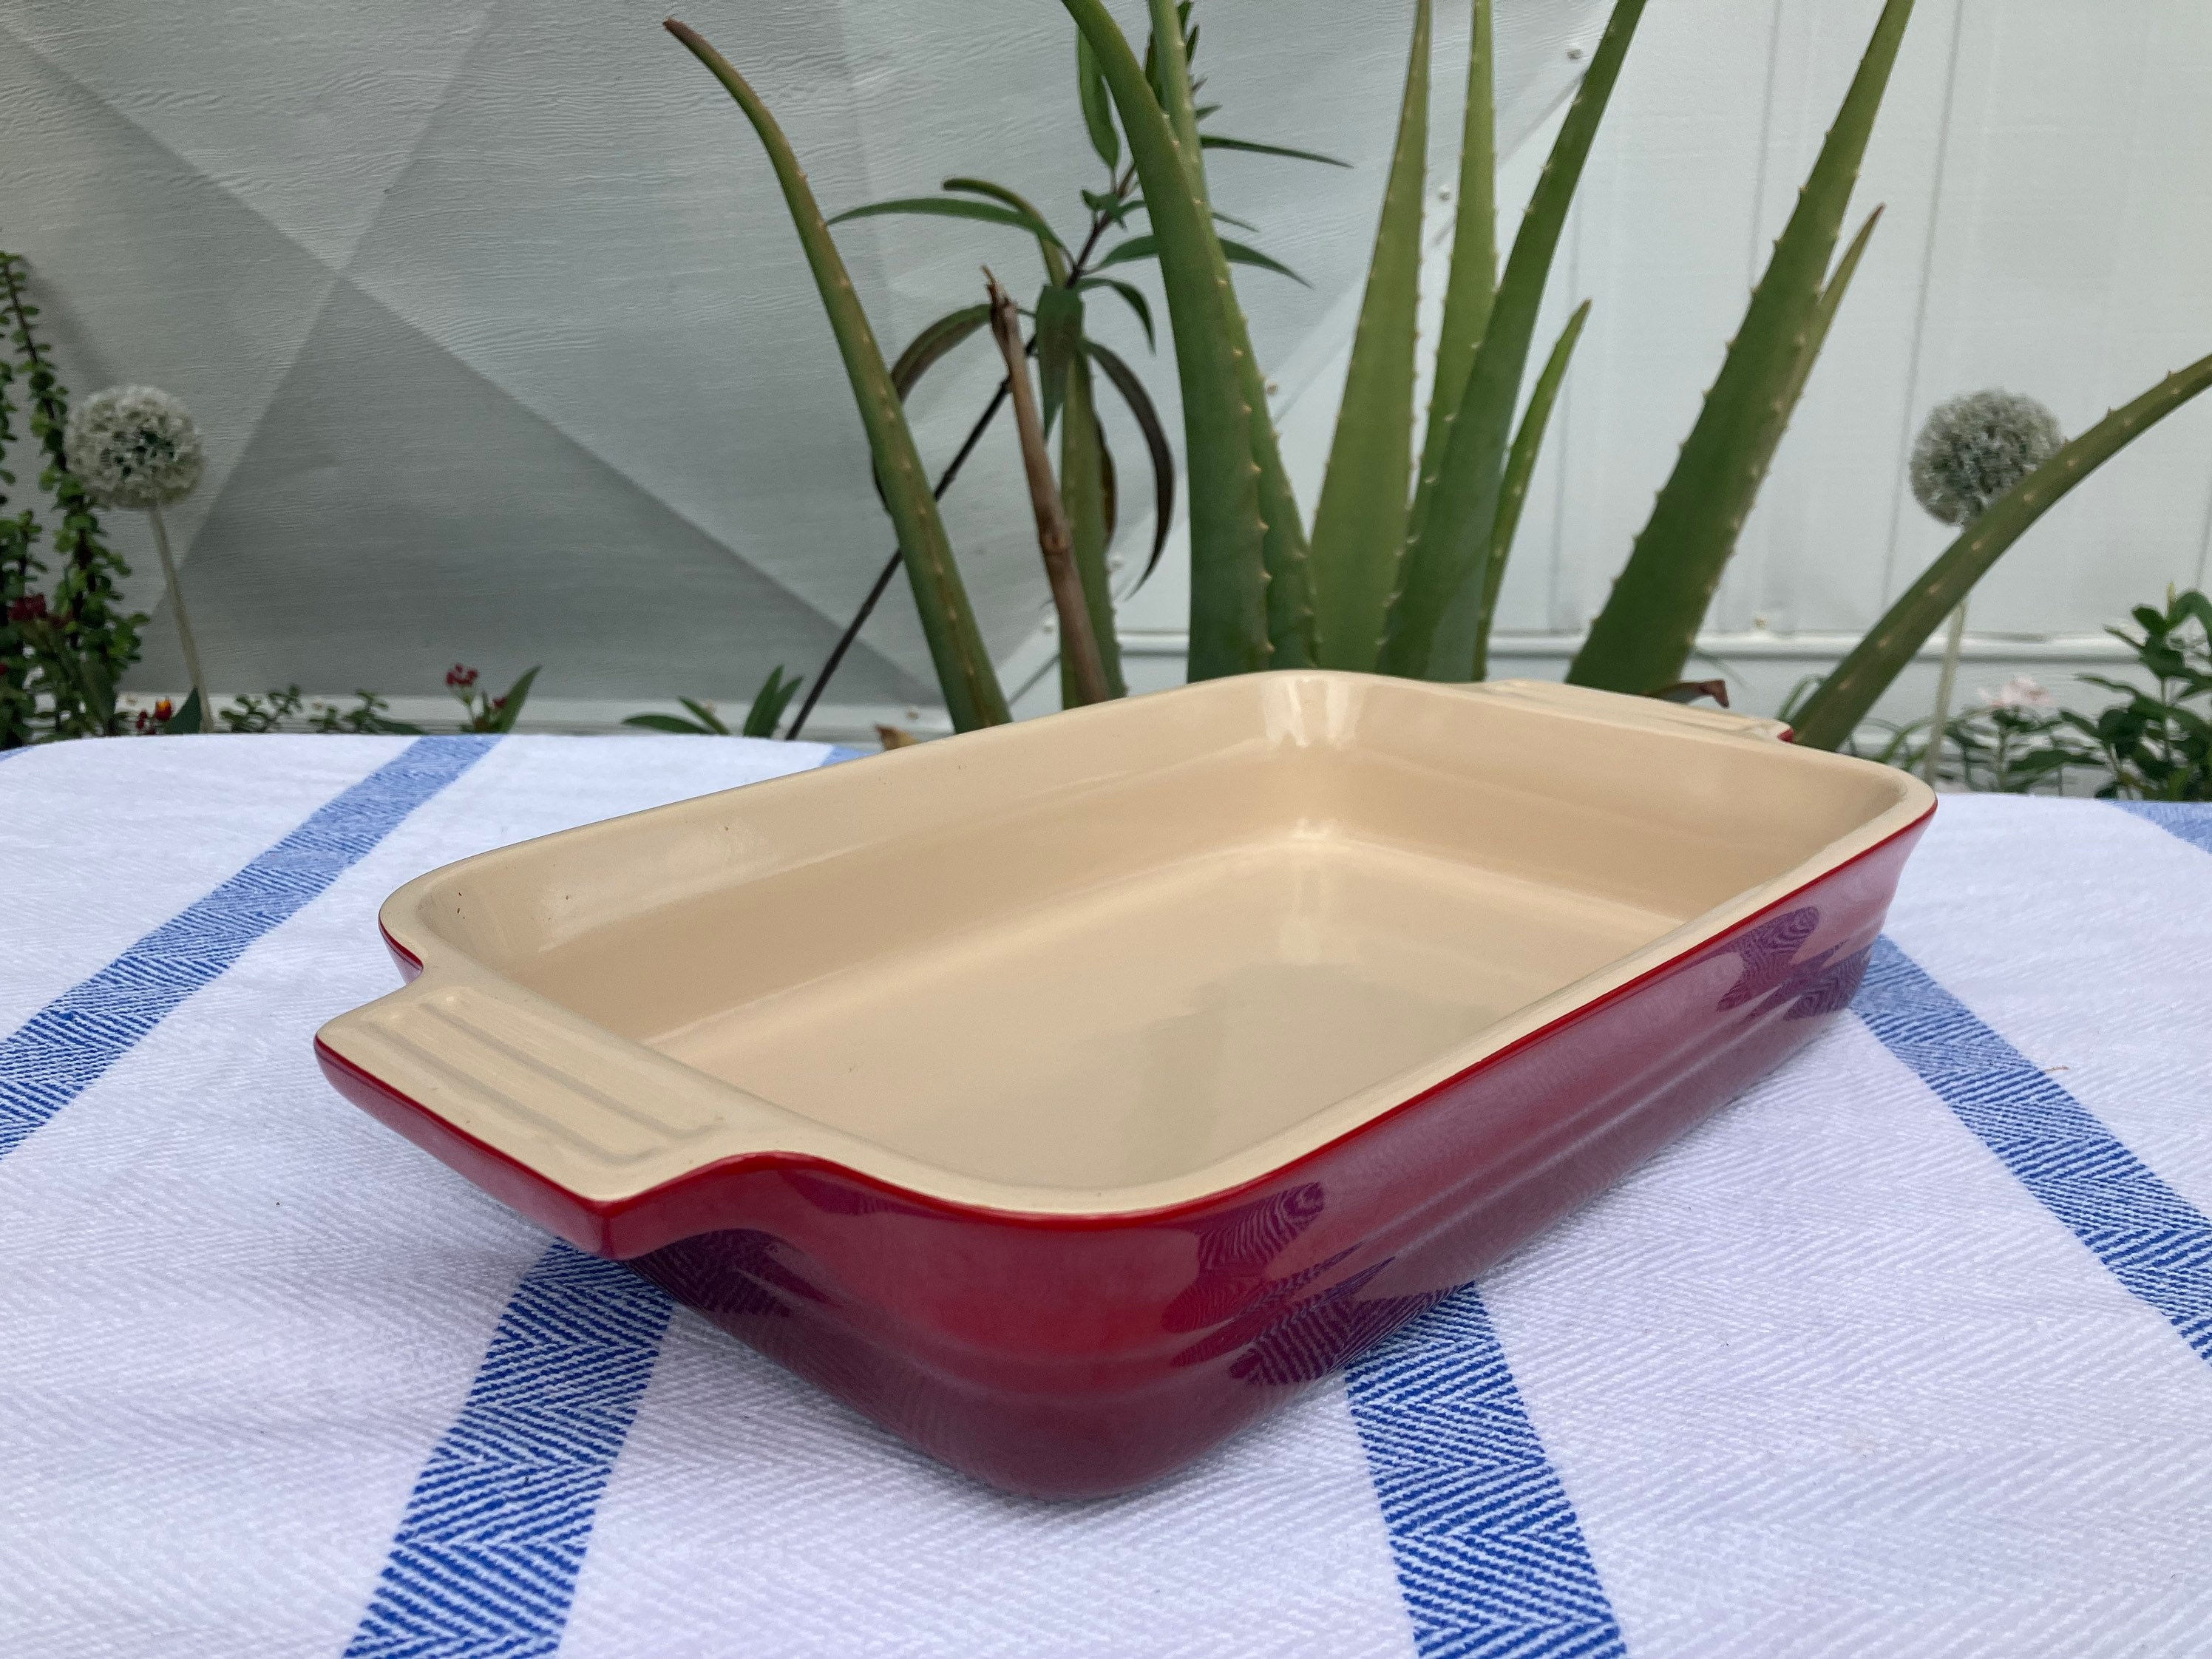 Le Creuset Red Ombré Stoneware Baker 10x7 Handled Baking Pan Le